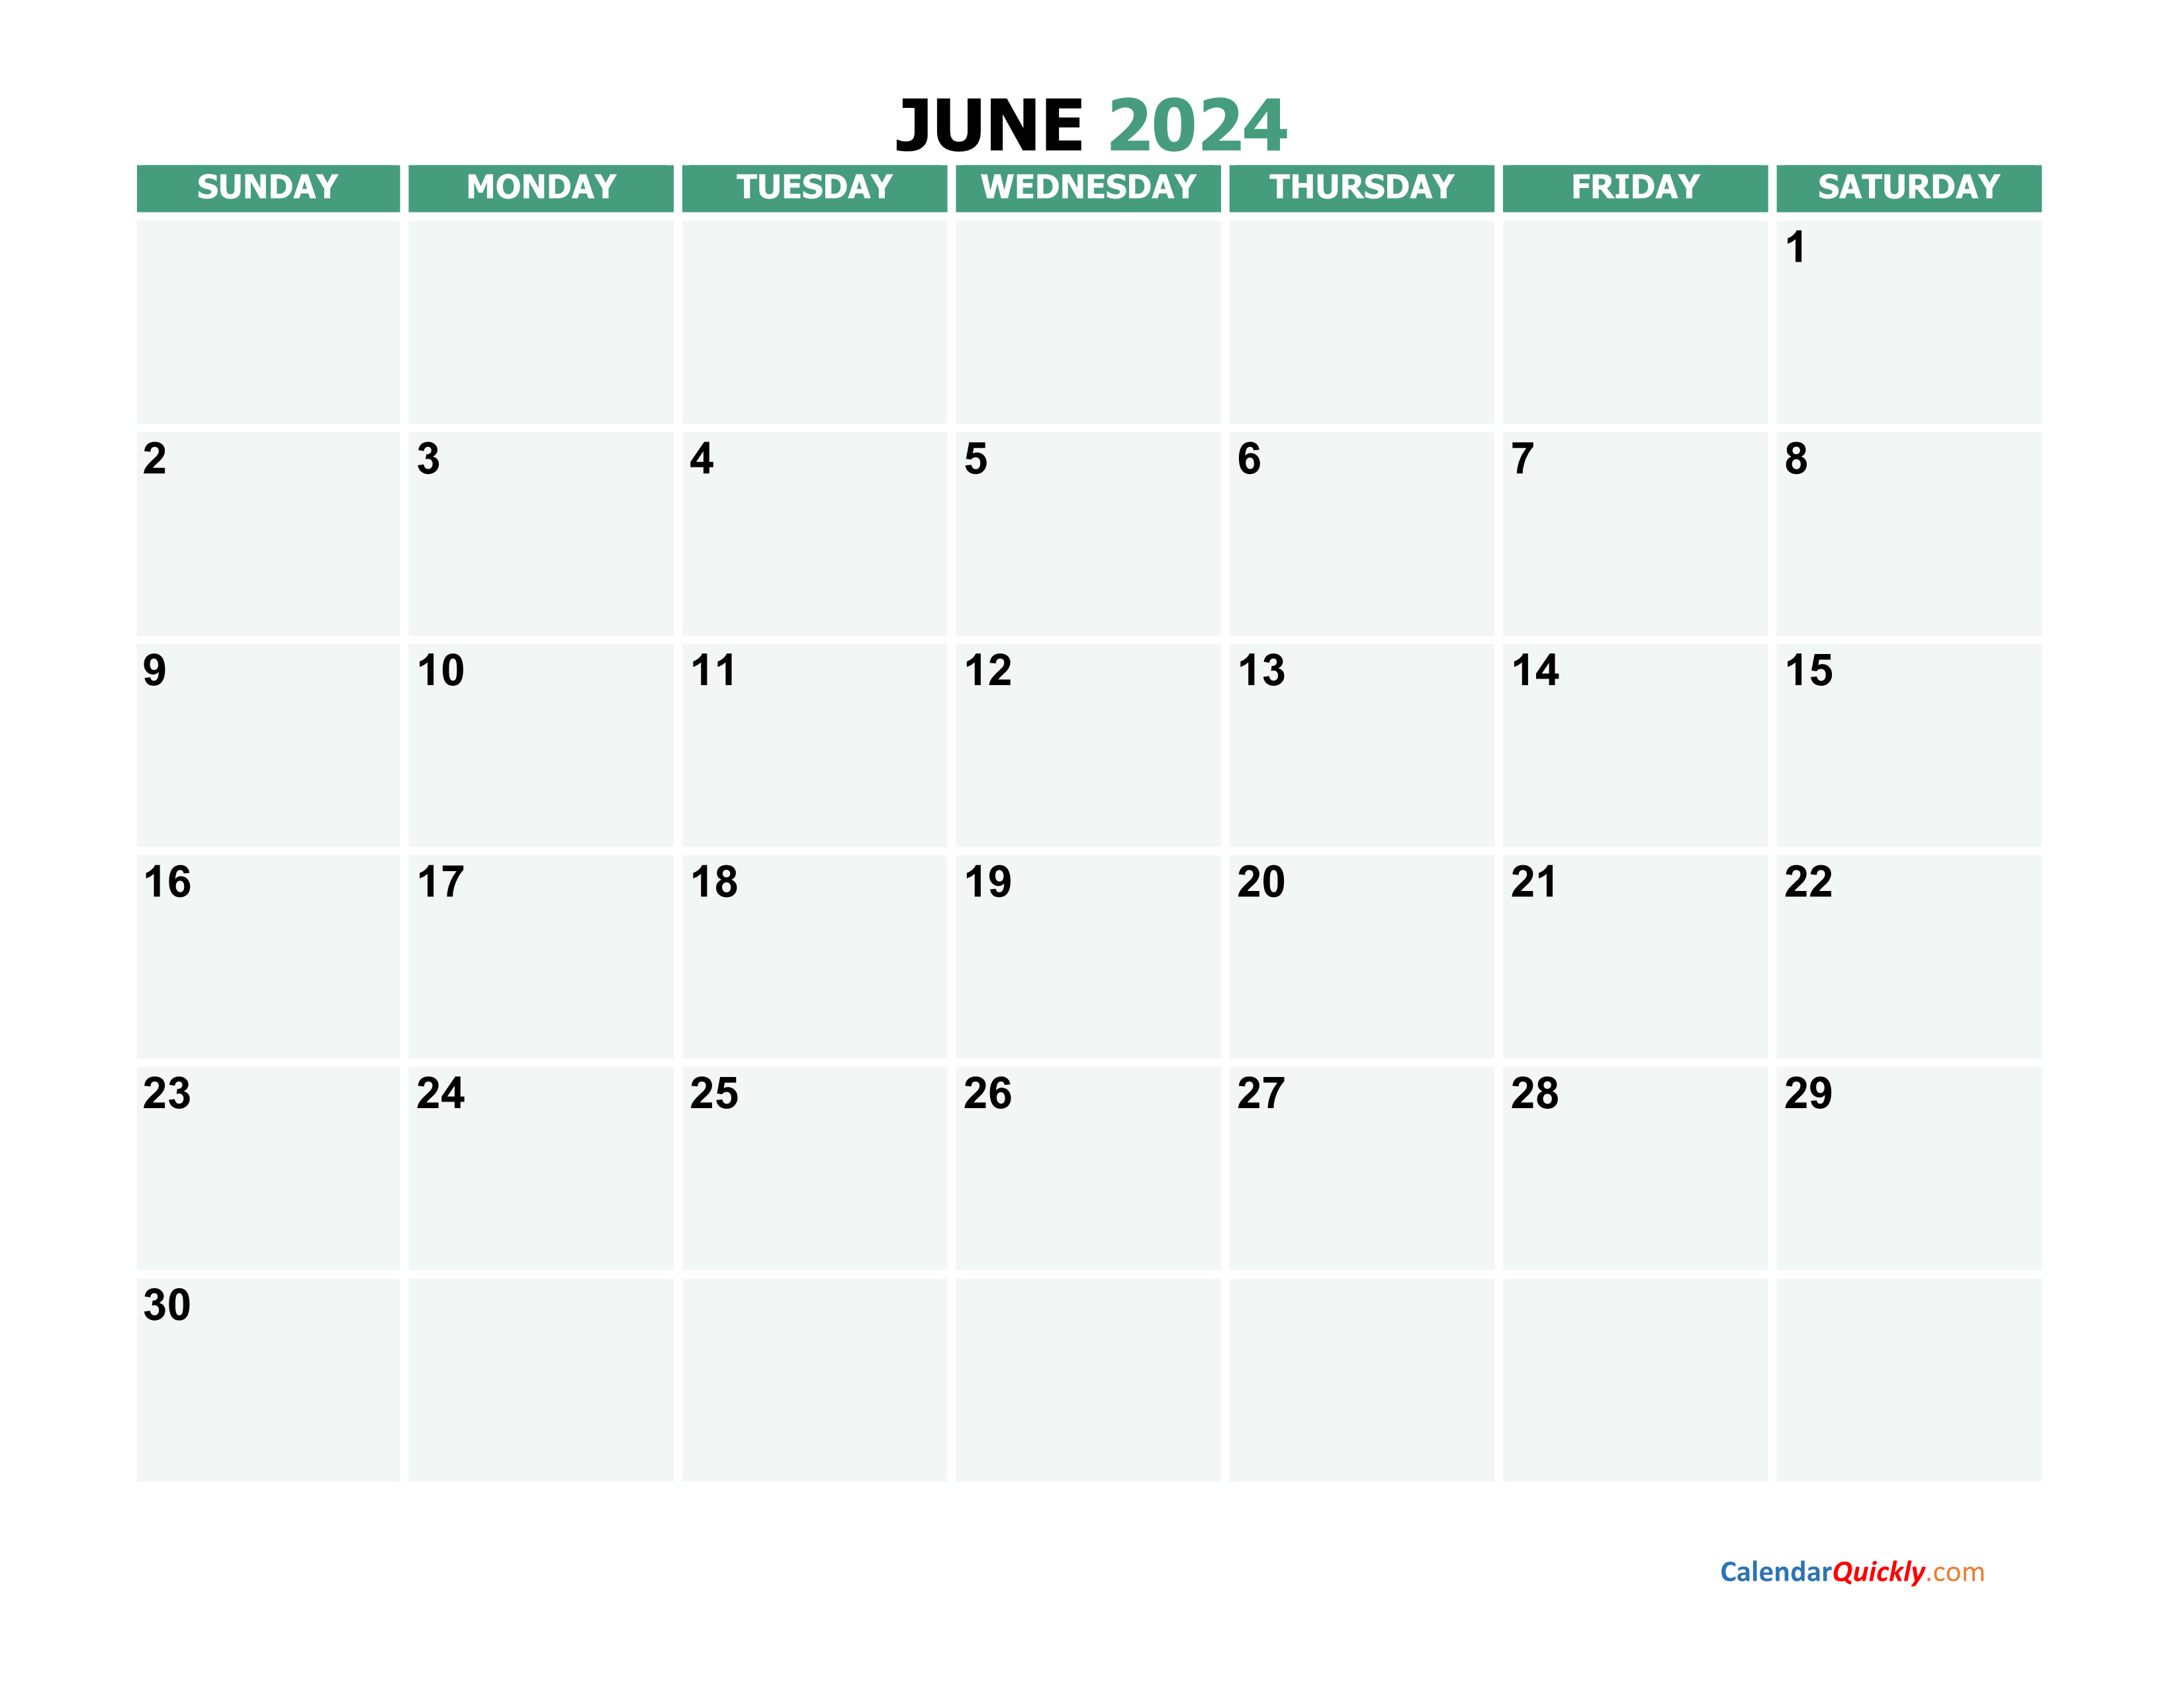 June 2024 Printable Calendar Calendar Quickly